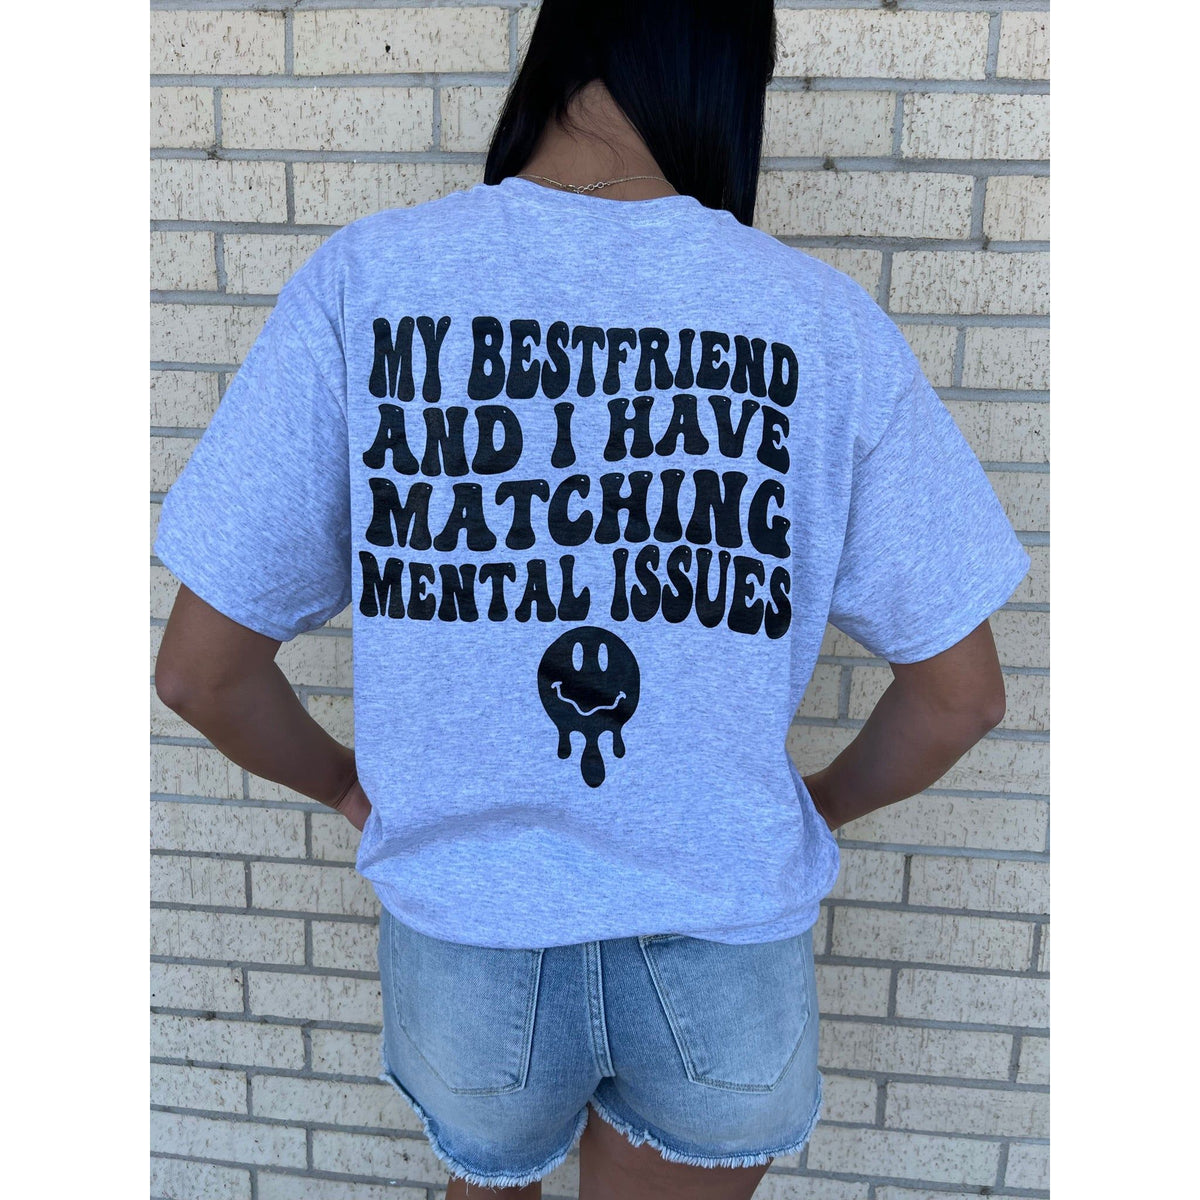 Matching Mental Issues Tee or Sweatshirt